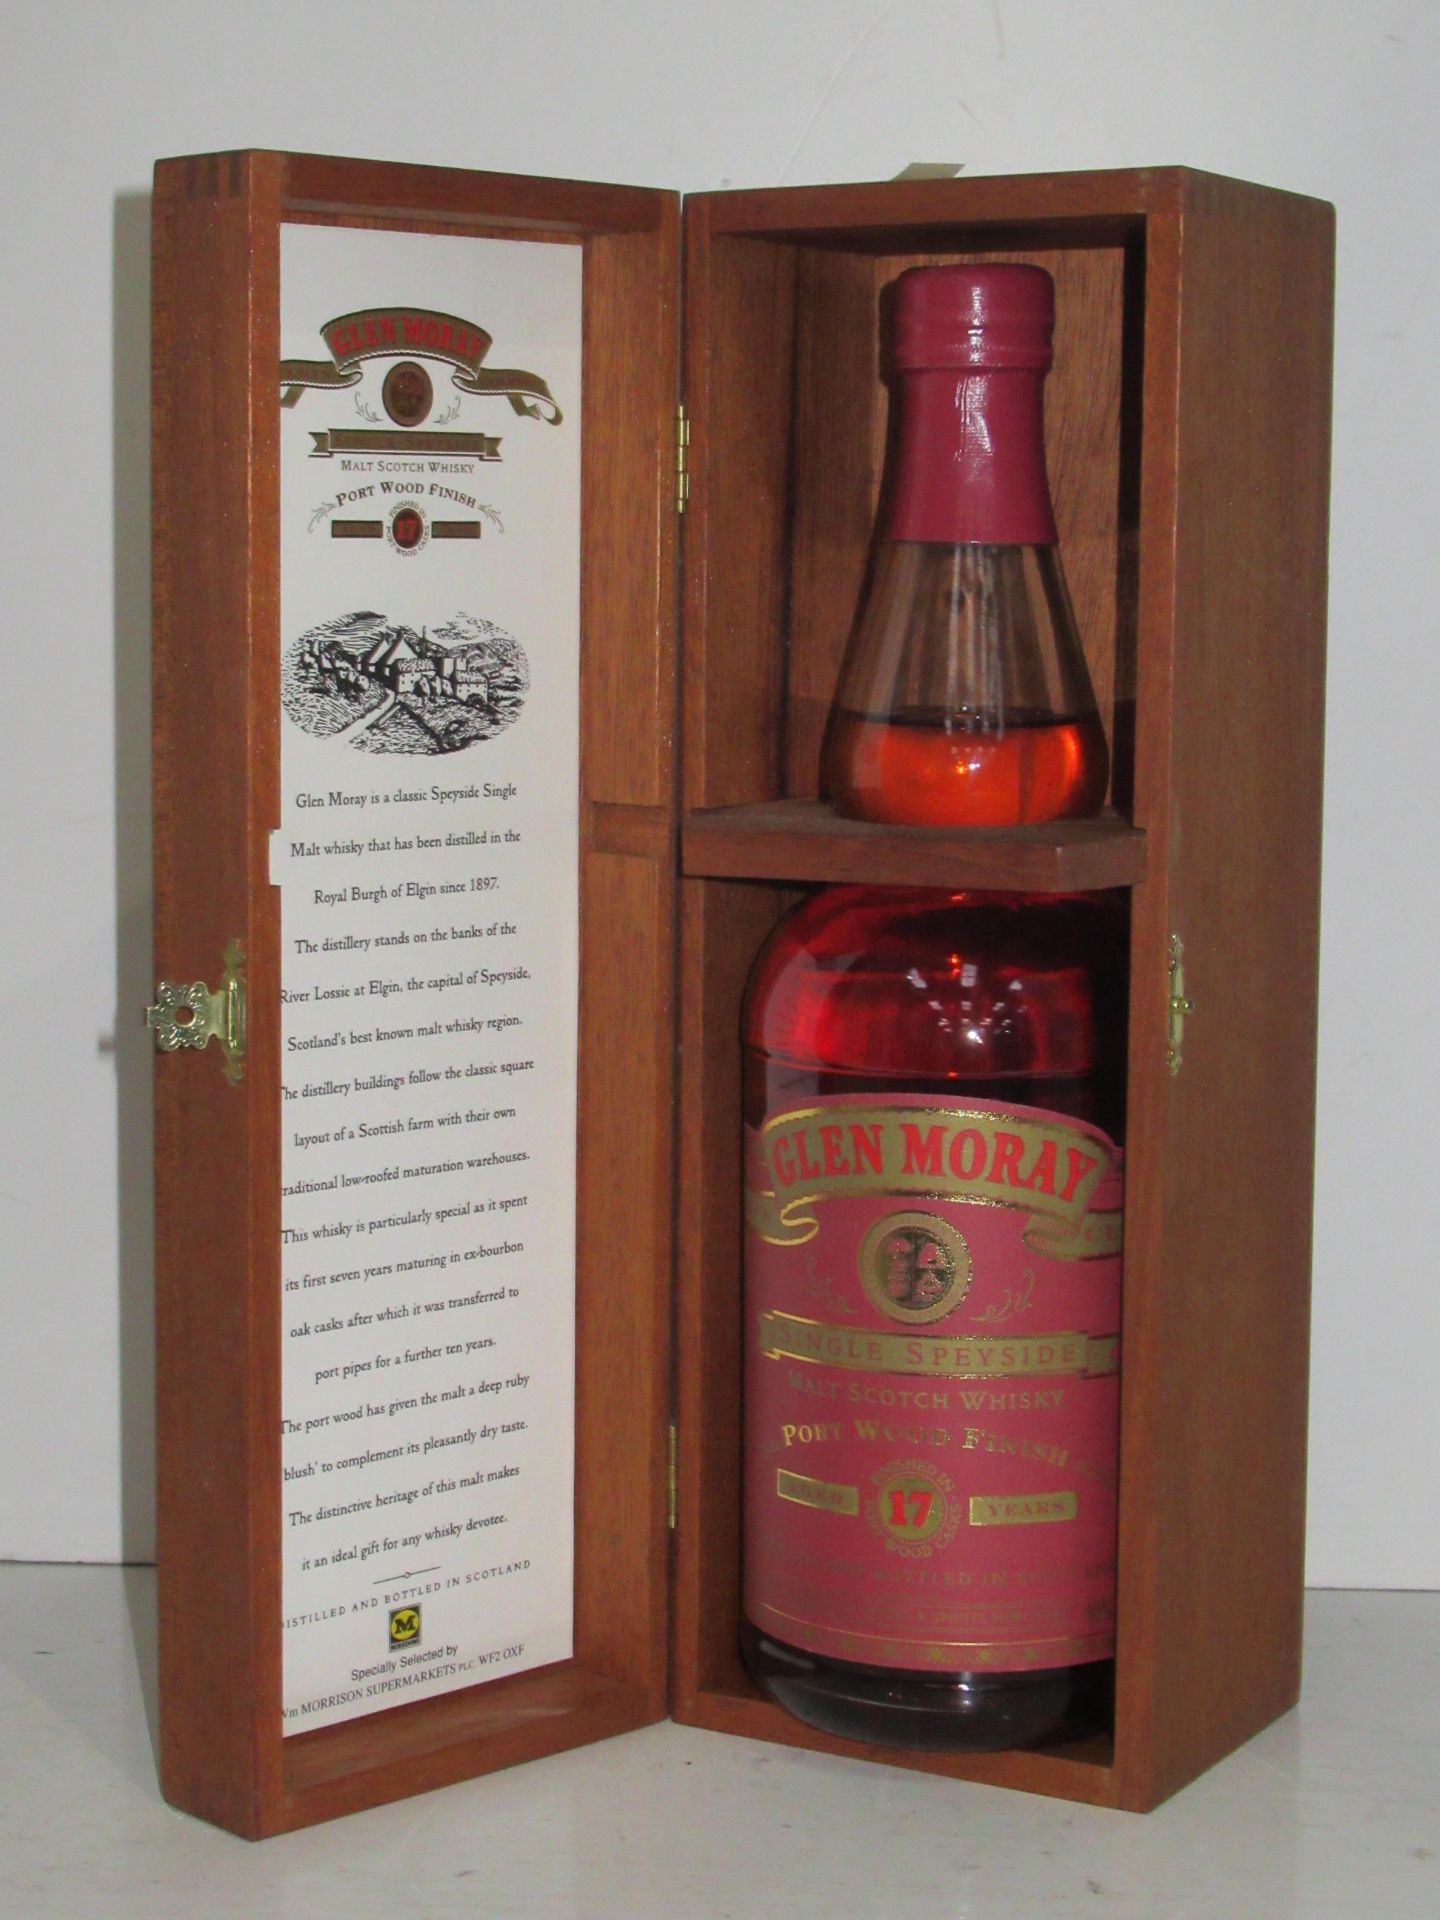 Glen Moray Single Speyside Malt Scotch Whisky